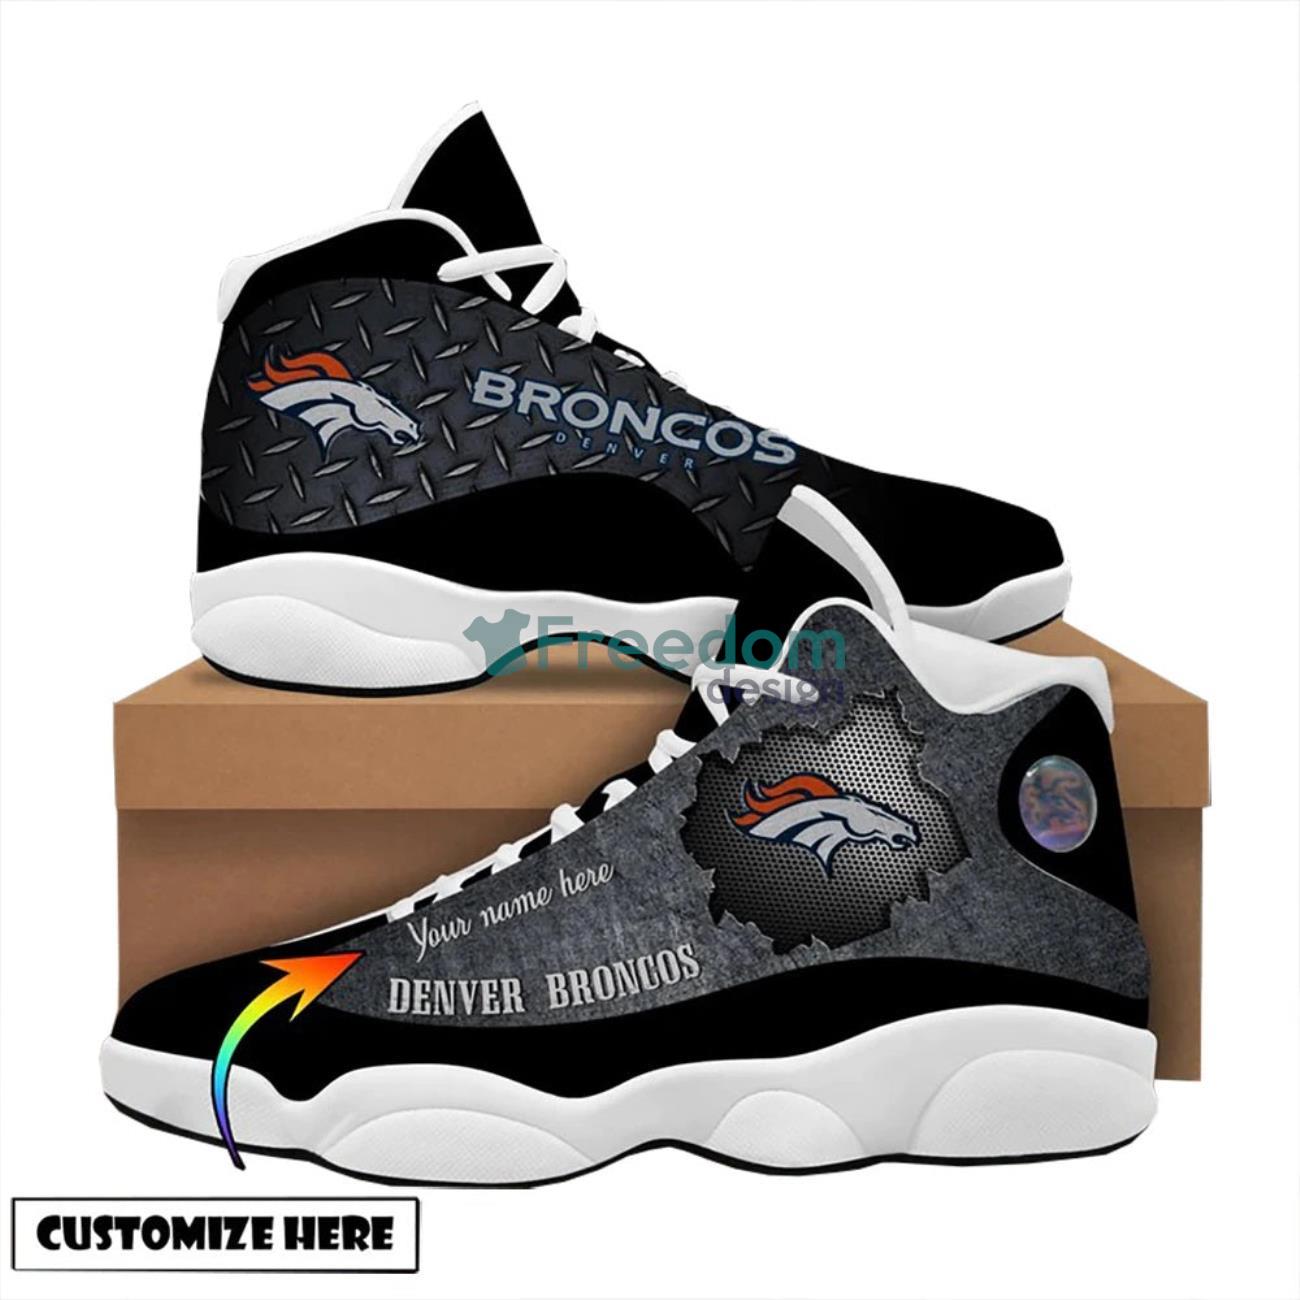 CUstom Name Denver Broncos Team Air Jordan 13 Shoes For Fans